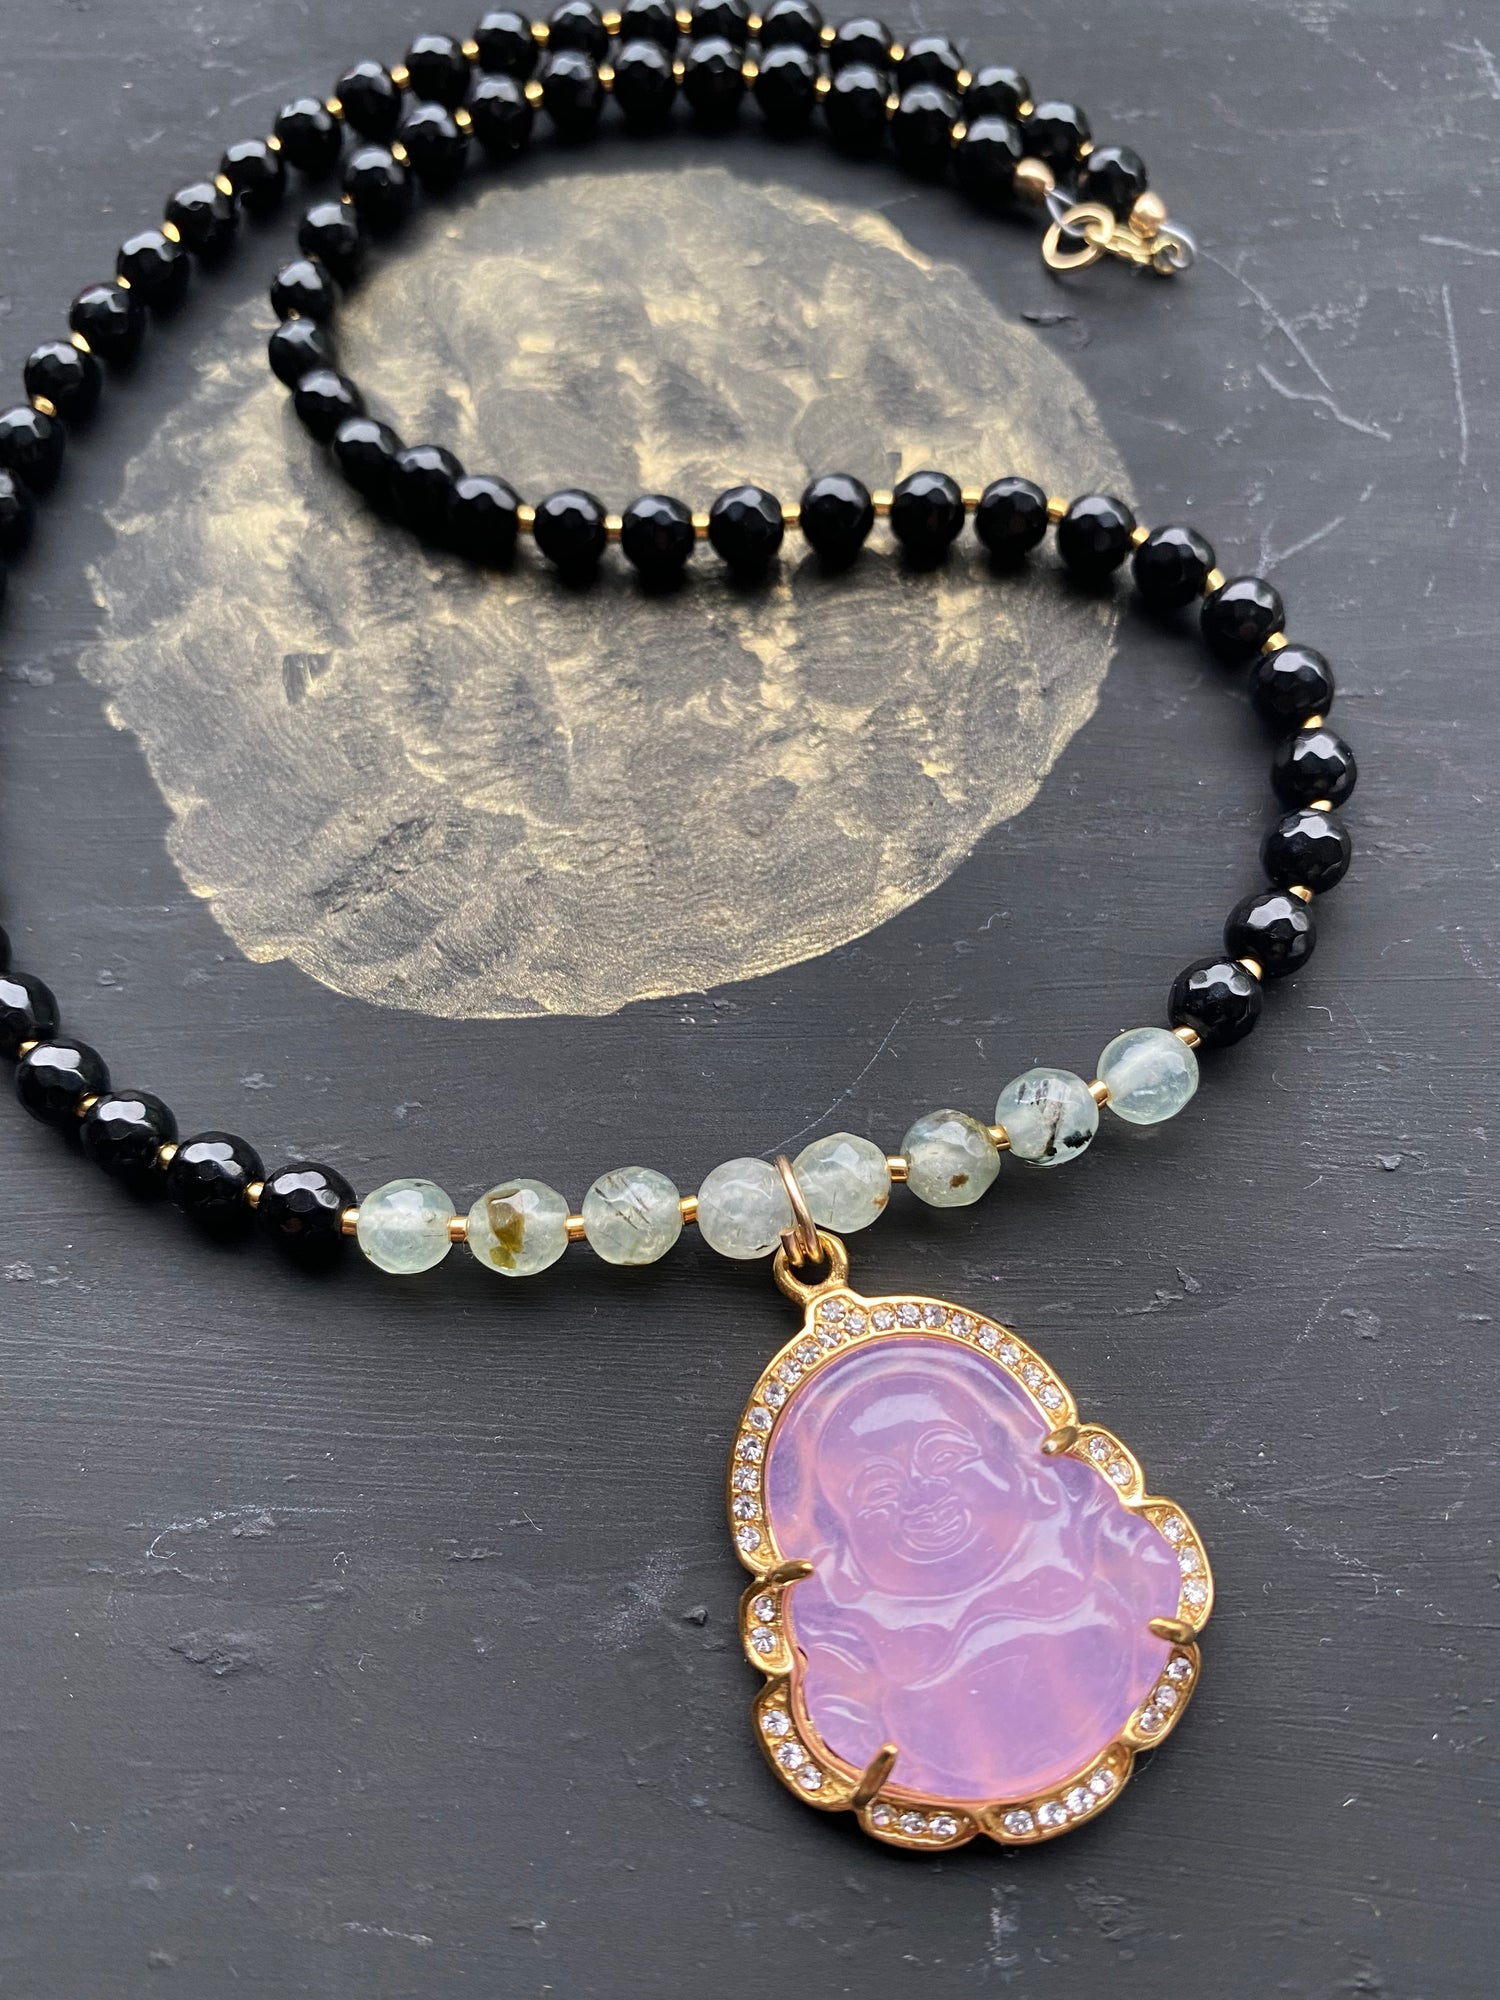 Gemstone Buddha Necklace Handmade - Moon Room Shop and Wellness